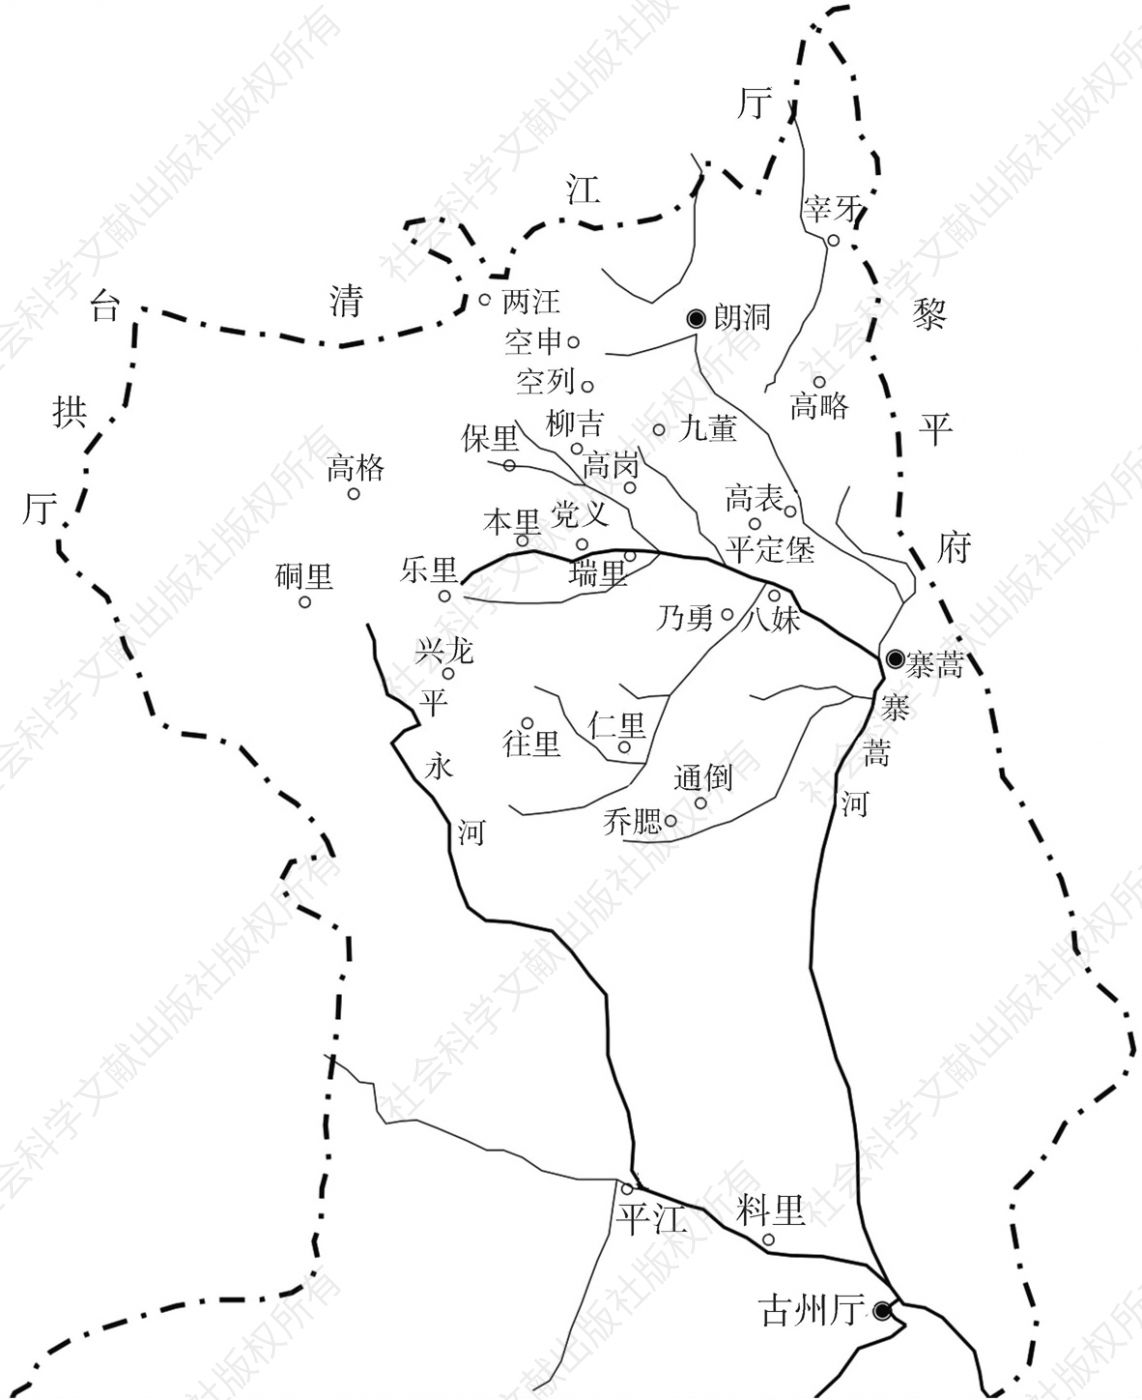 图5-1 平江土把总辖境示意